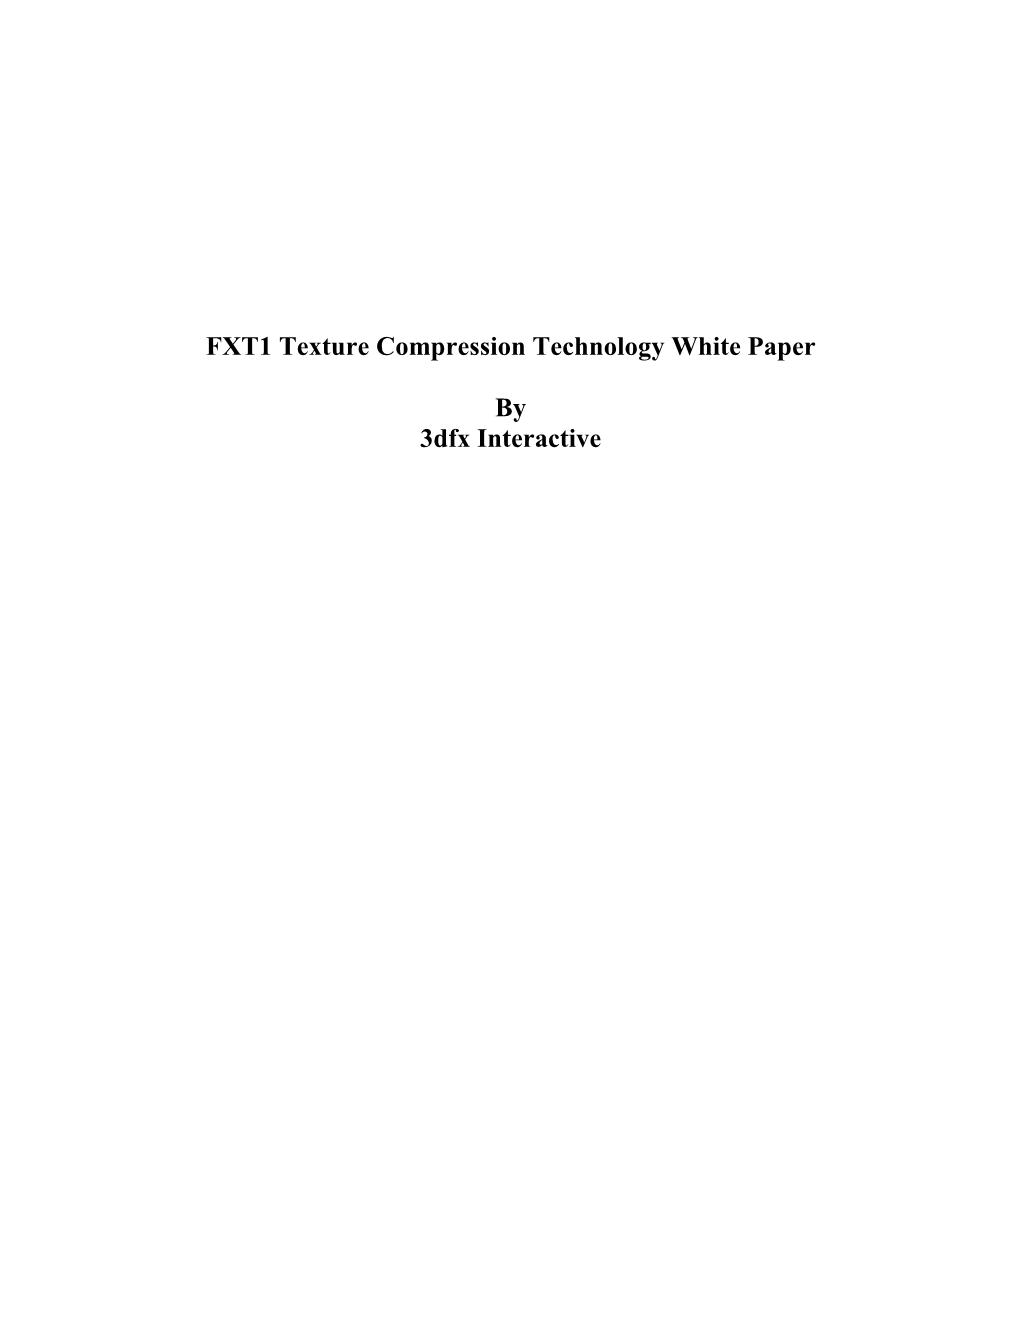 FXT1 Texture Compression Technology White Paper by 3Dfx